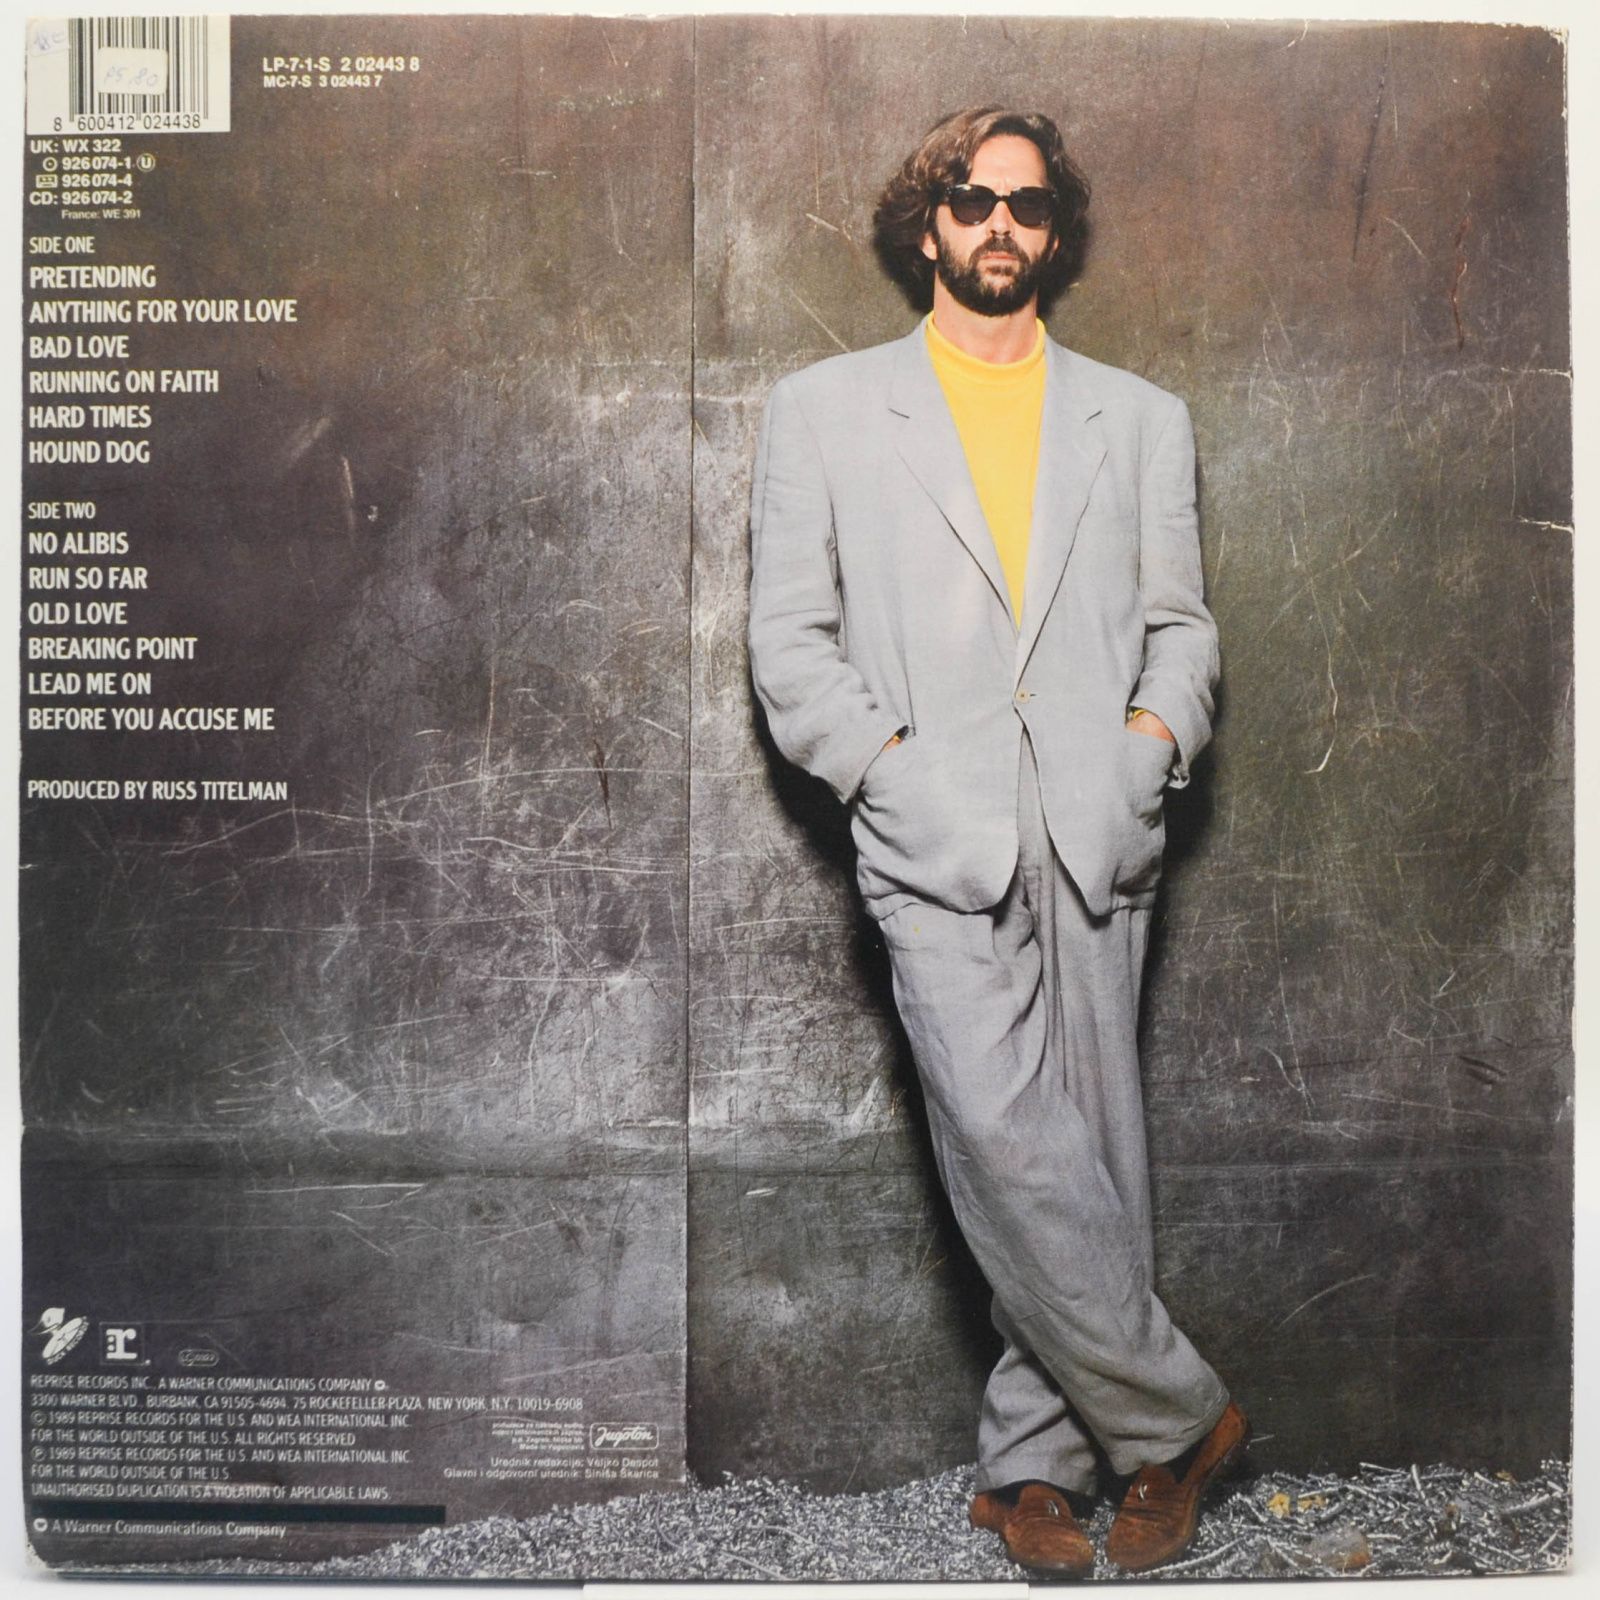 Eric Clapton — Journeyman, 1990